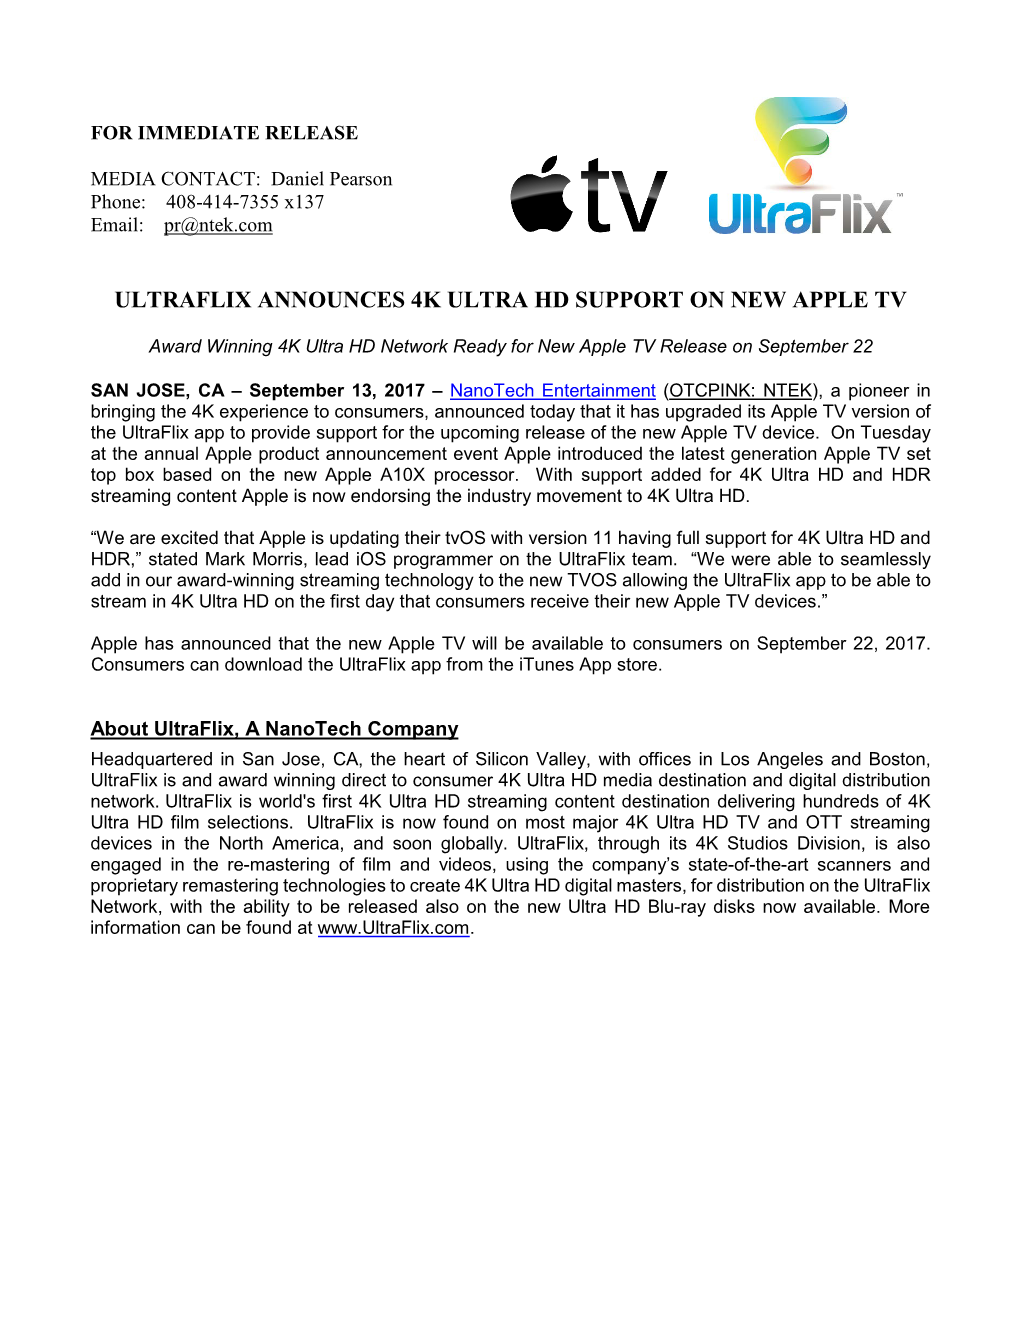 Ultraflix Announces 4K Ultra Hd Support on New Apple Tv